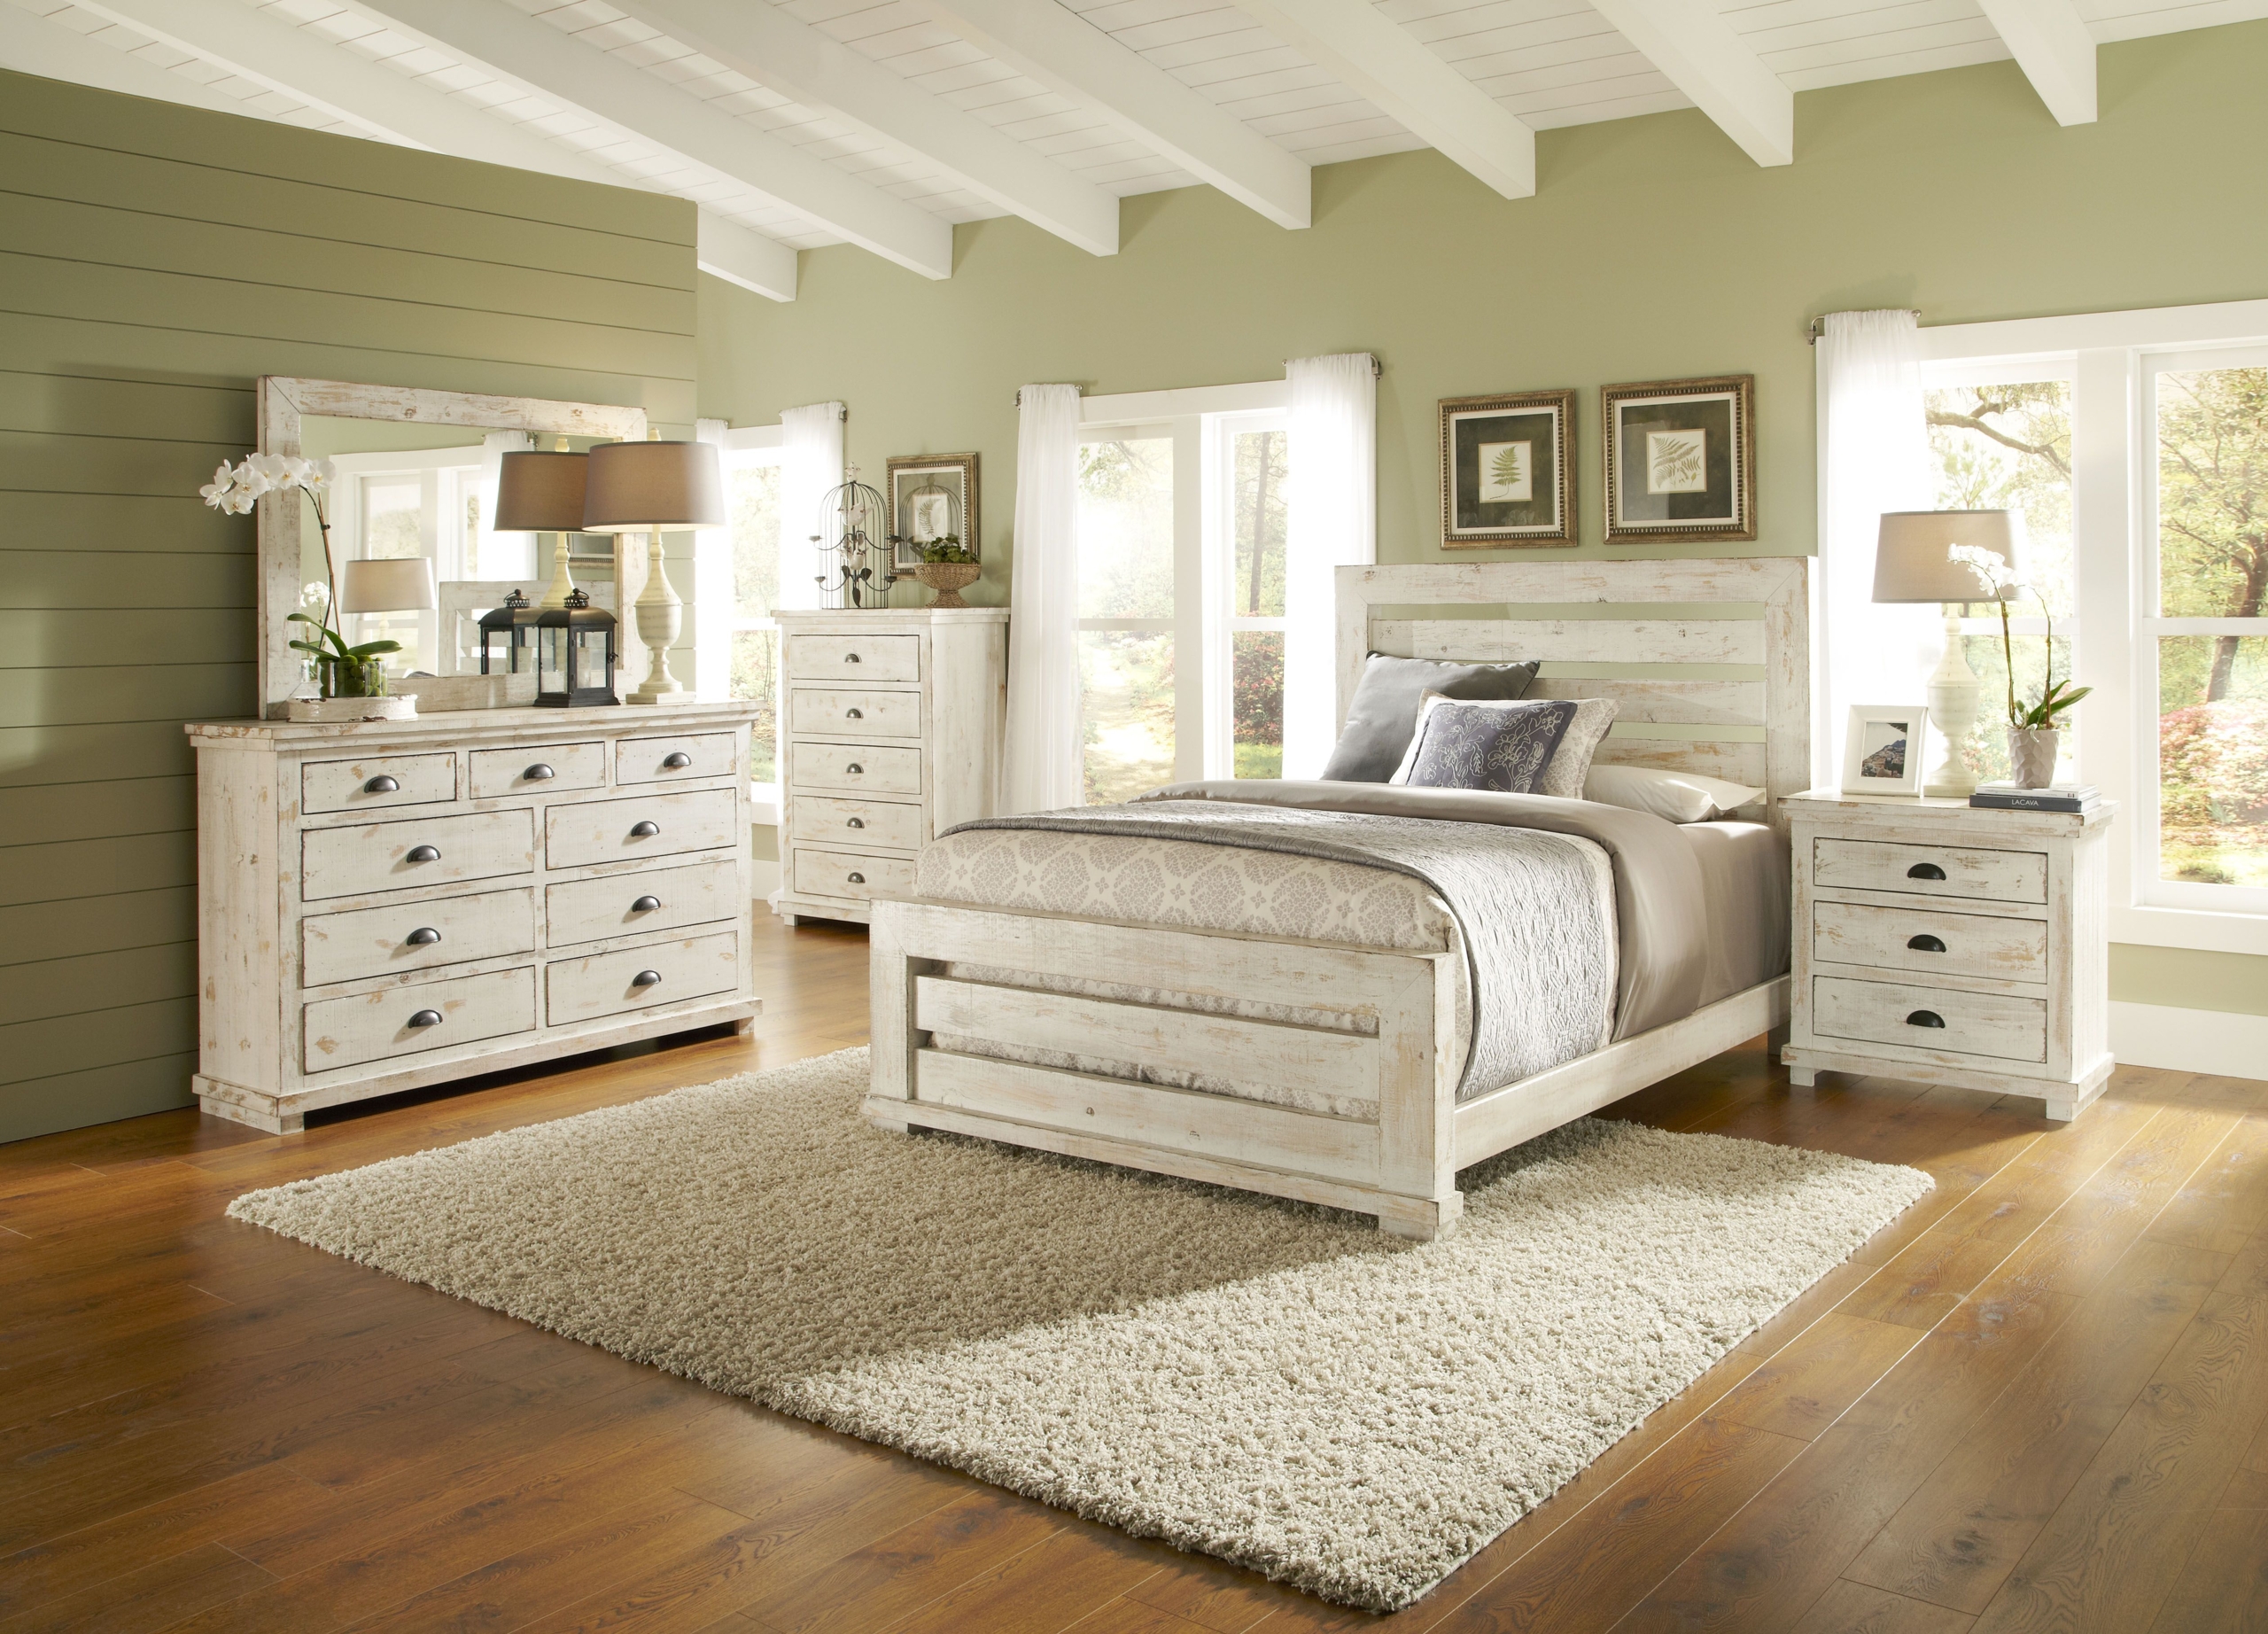 Distressed wood bedroom sets